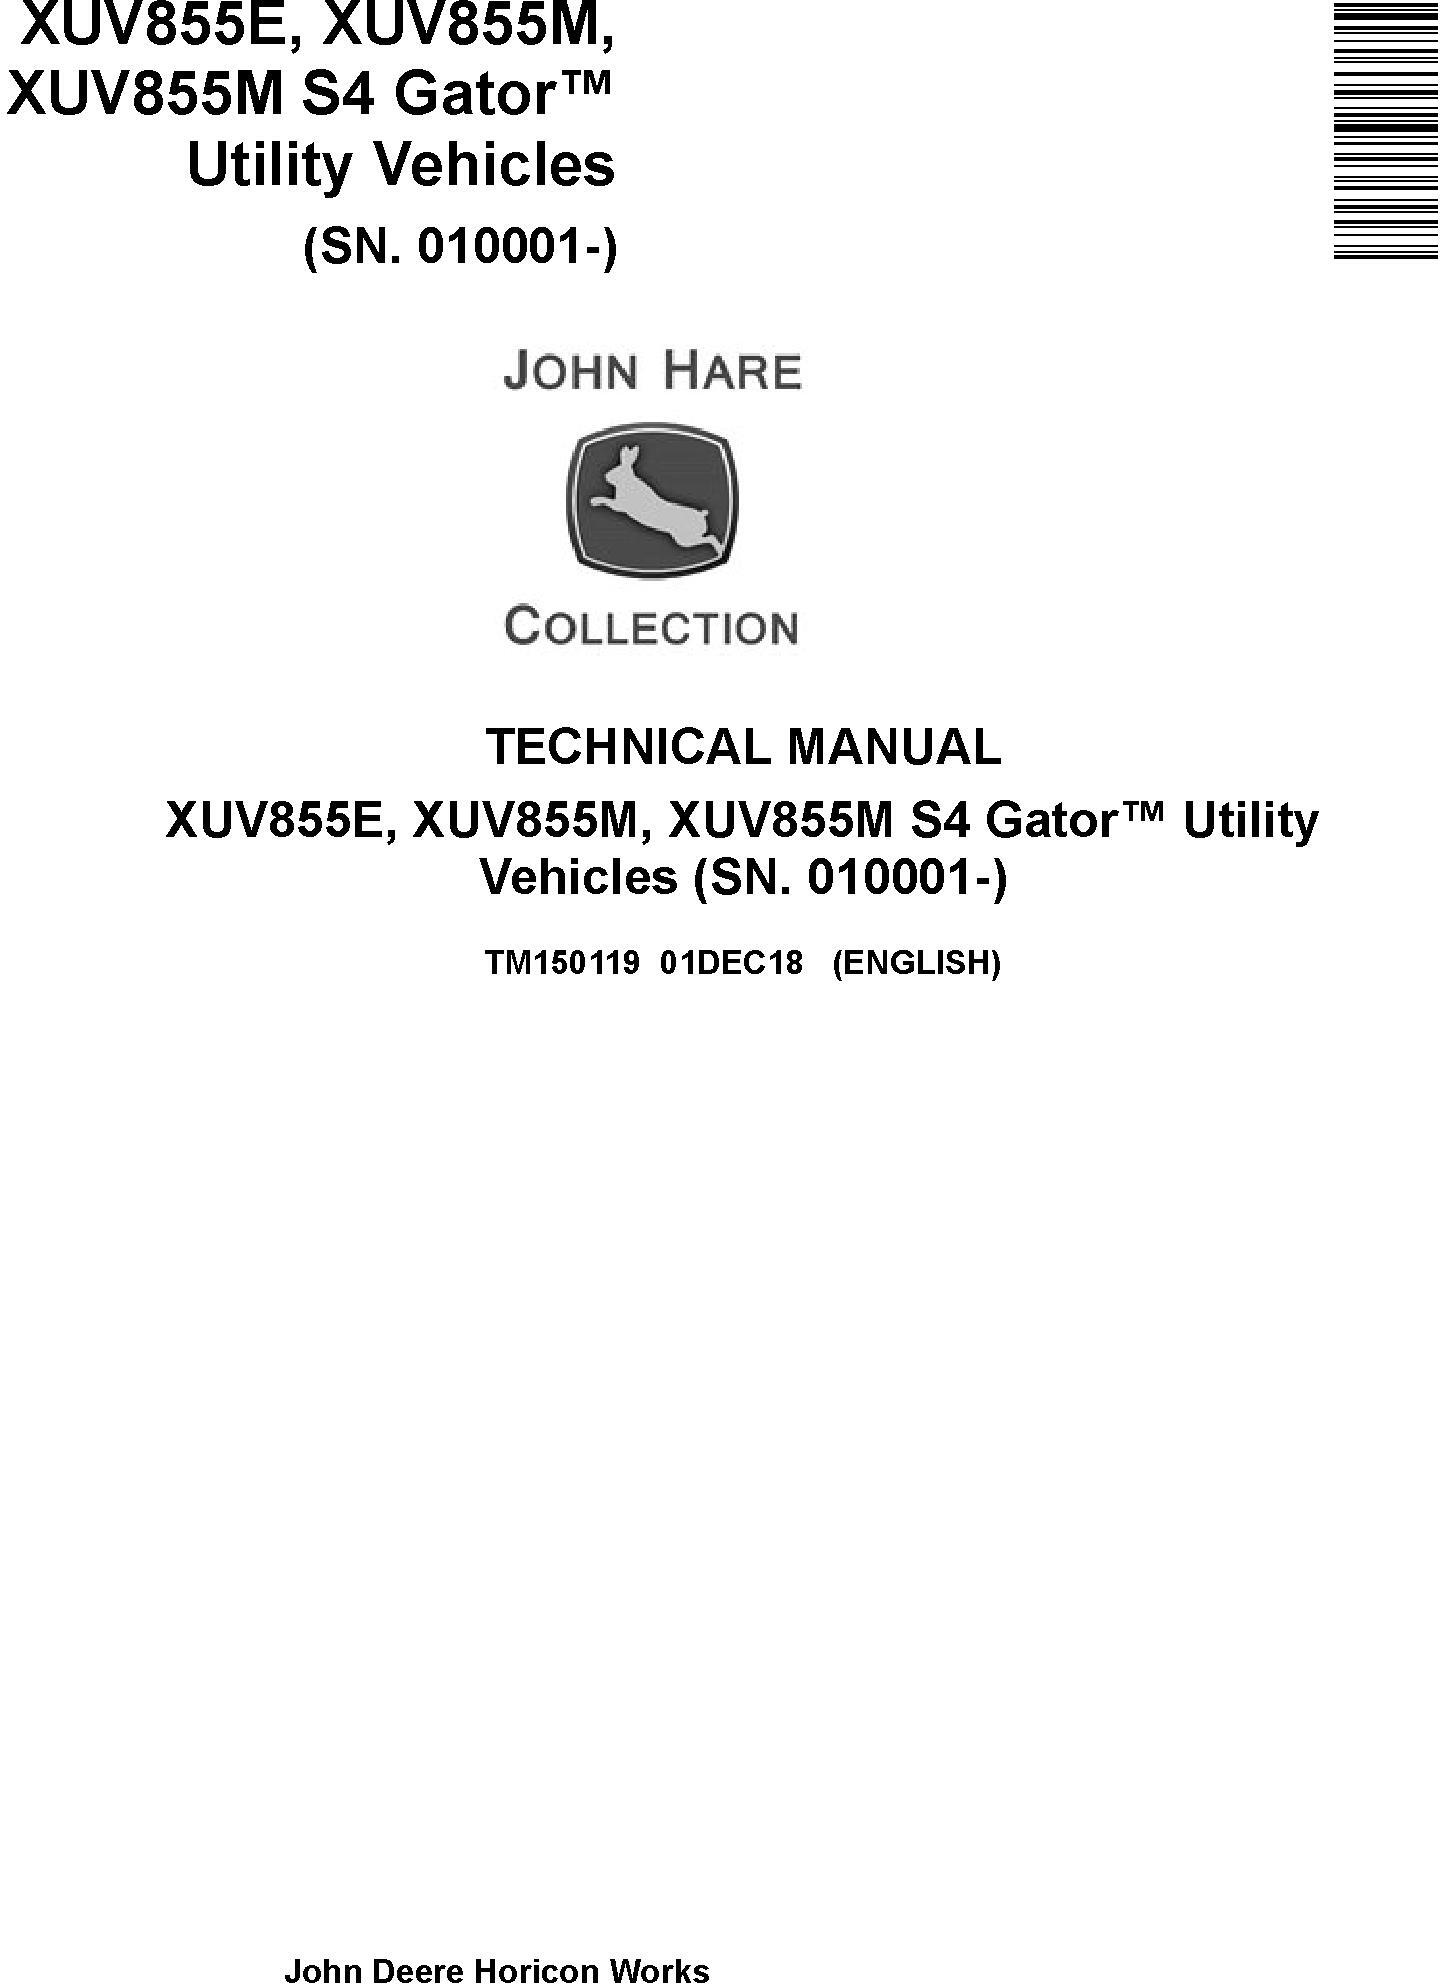 John Deere XUV855E XUV855M, XUV855M S4 Gator Utility Vehicles (SN.010001-) Technical Manual TM150119 - 19300